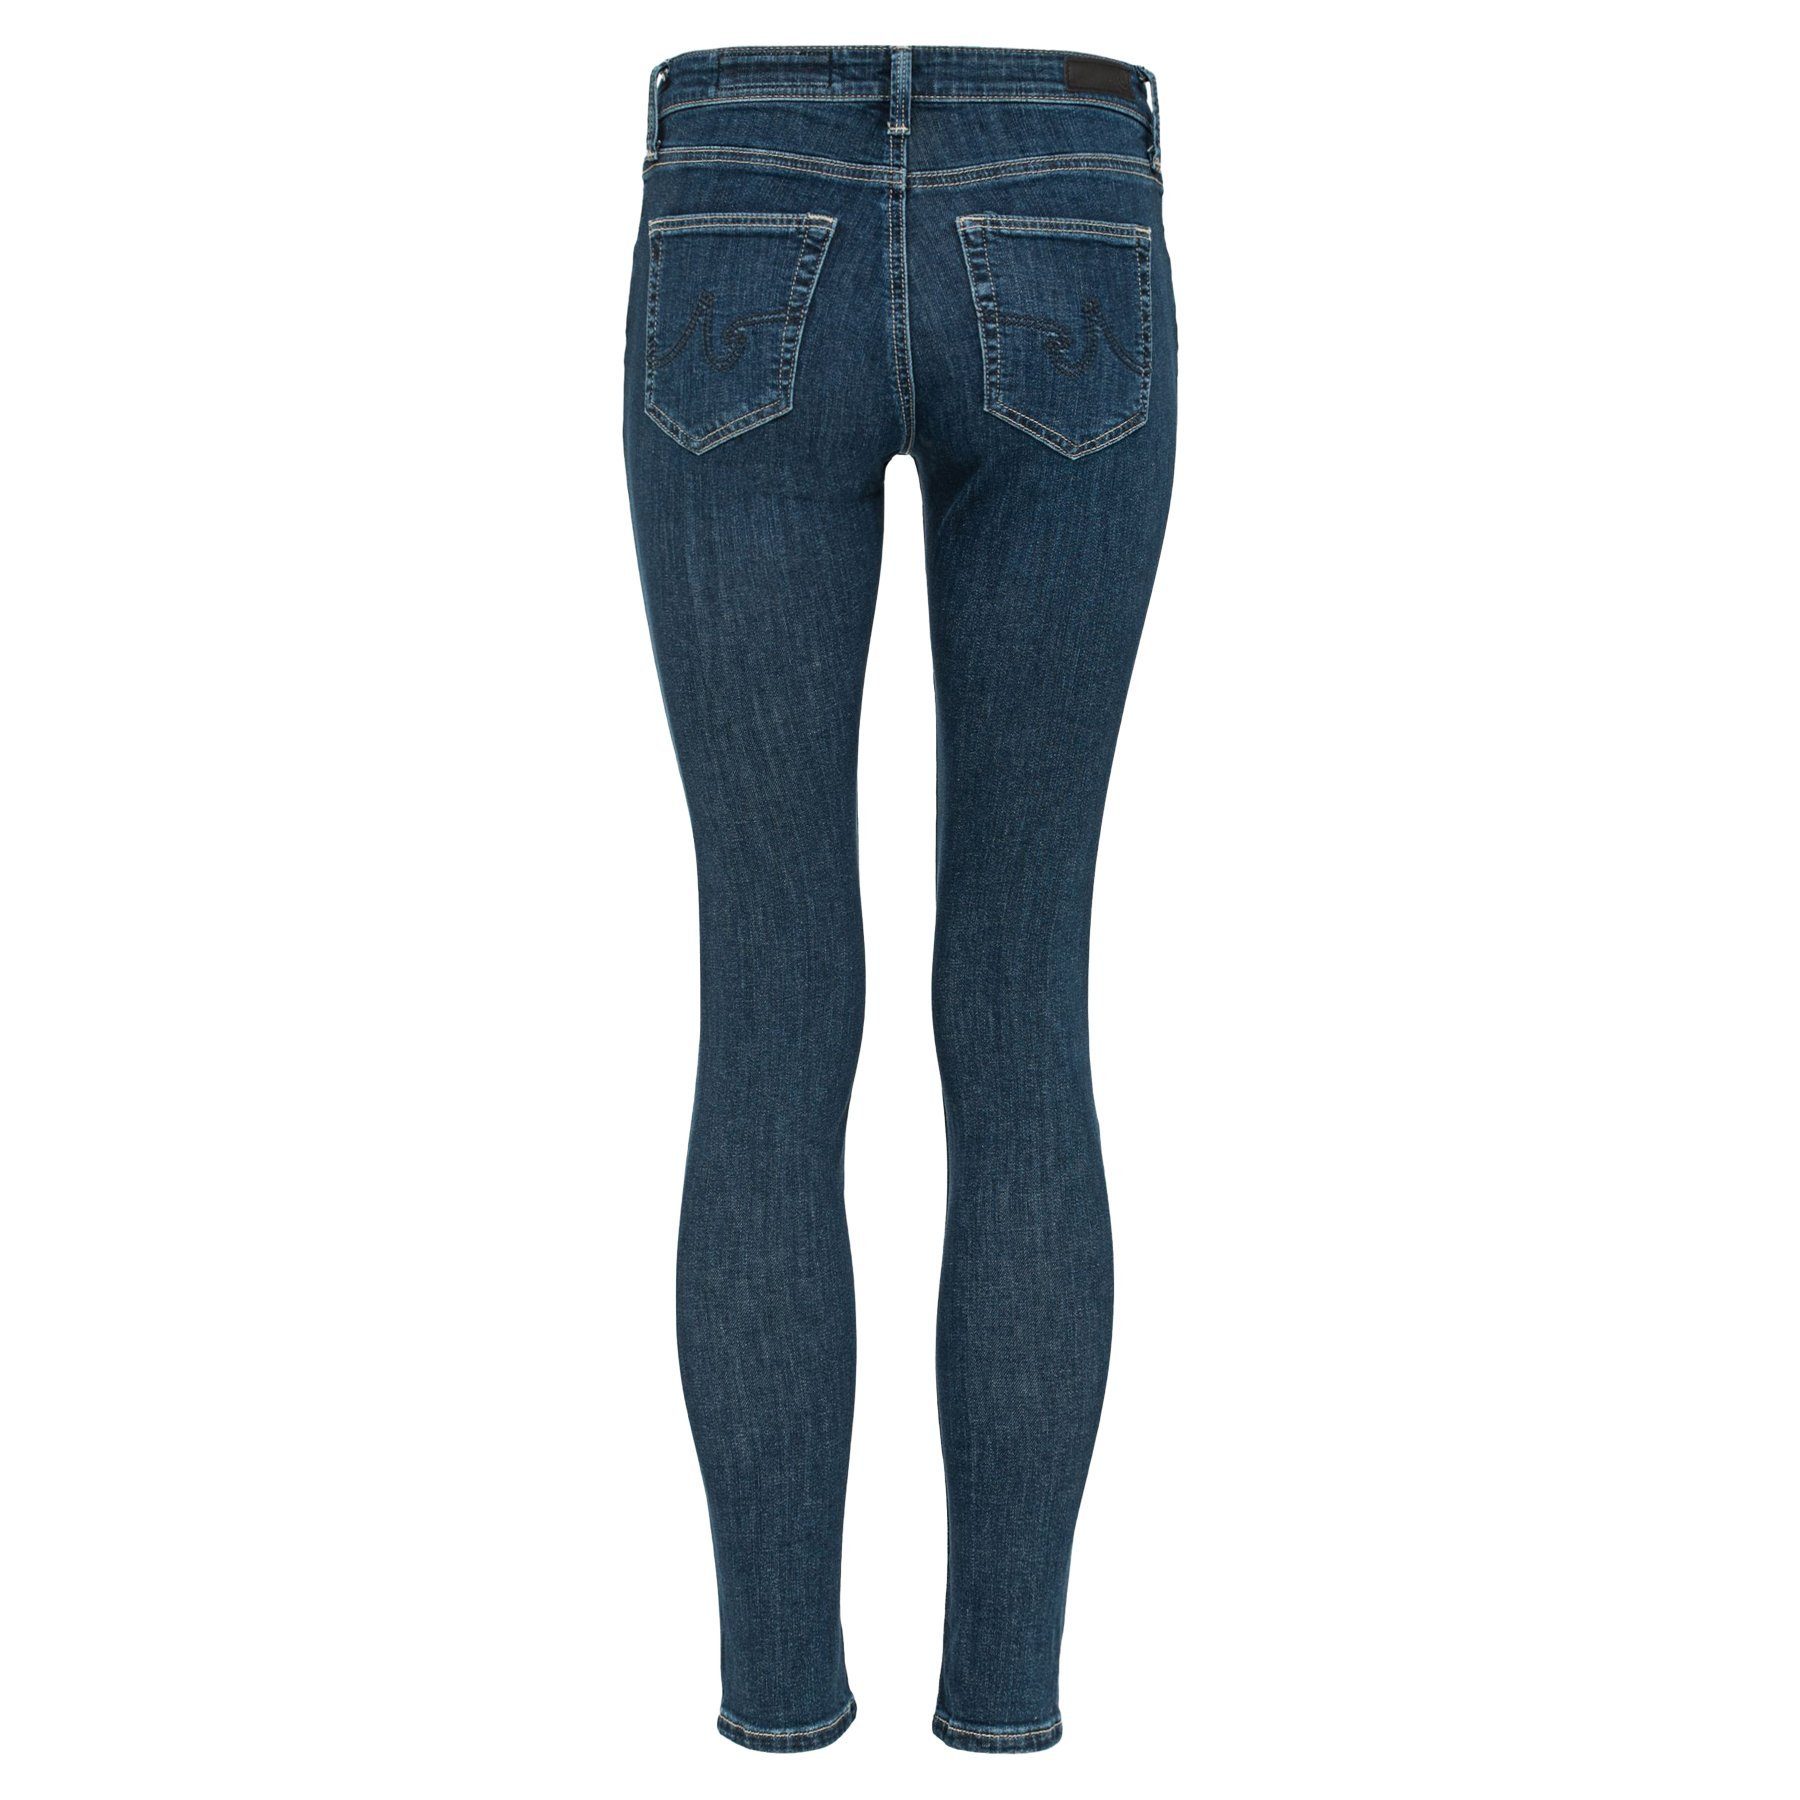 ADRIANO Baumwolle aus LEGGING 7/8-Jeans GOLDSCHMIED ANKLE Jeans